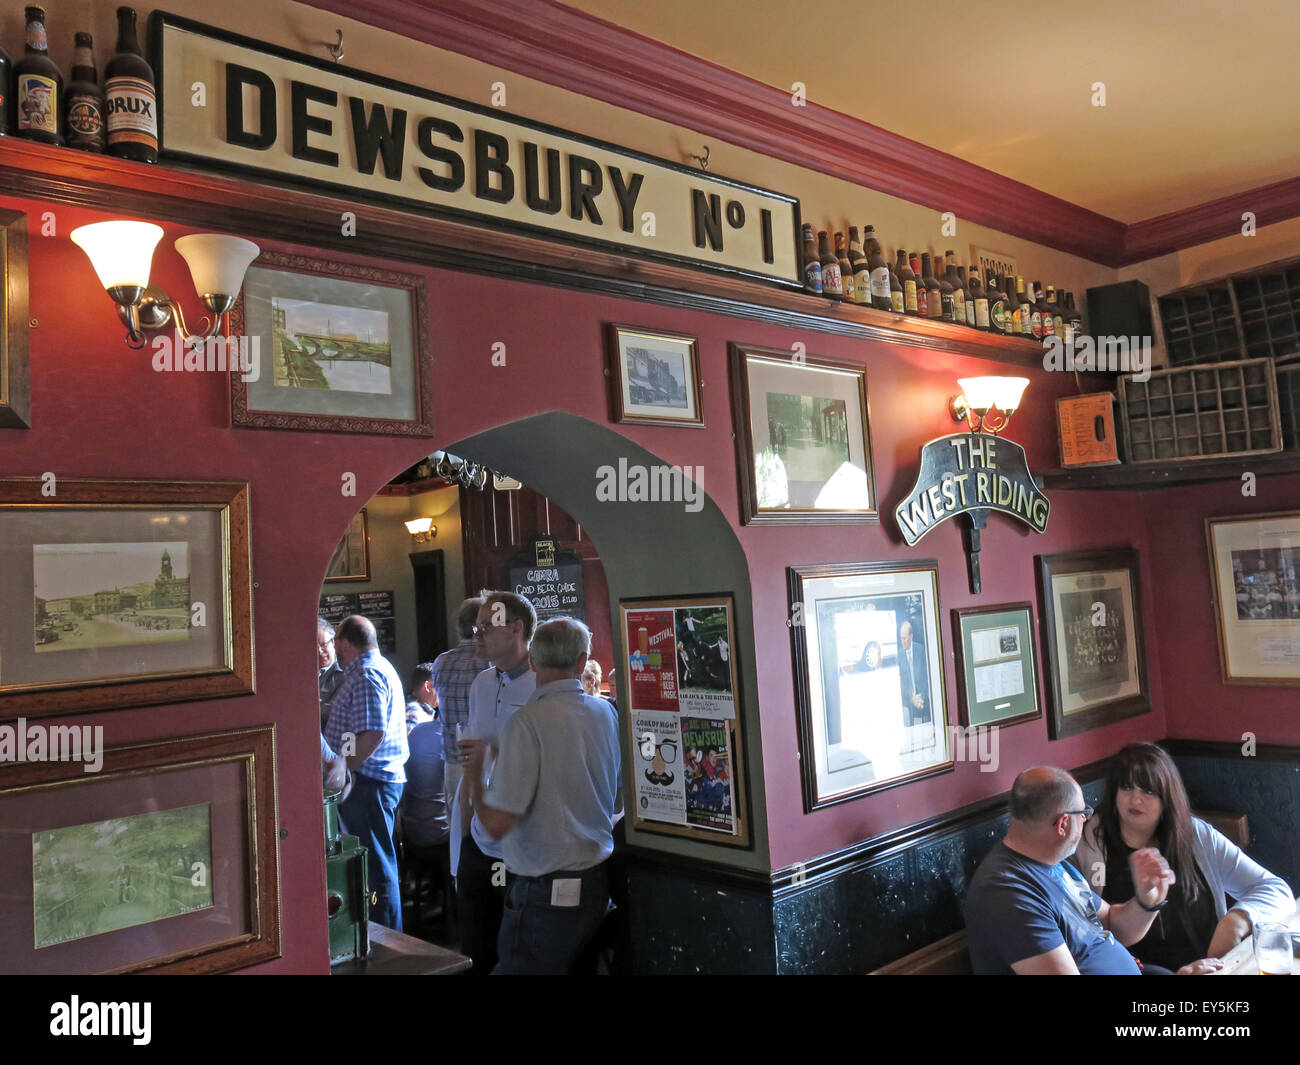 West Riding Pub, Dewsbury Railway Station, West Yorkshire, England, UK,Dewsbury No 1 Banque D'Images